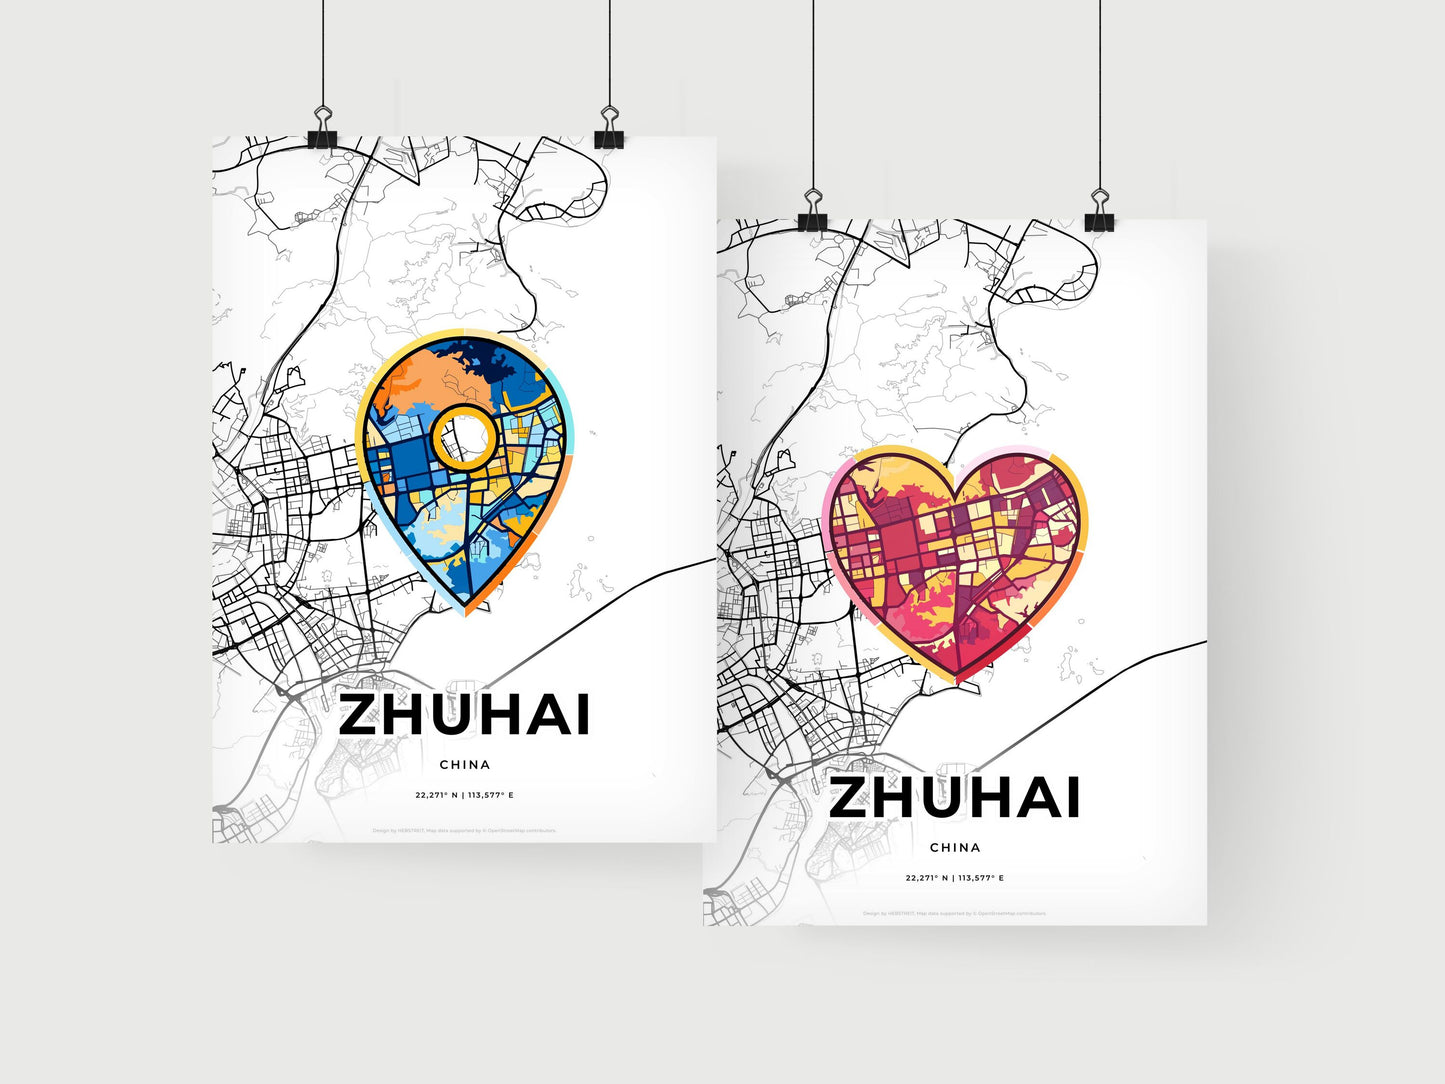 ZHUHAI CHINA minimal art map with a colorful icon.